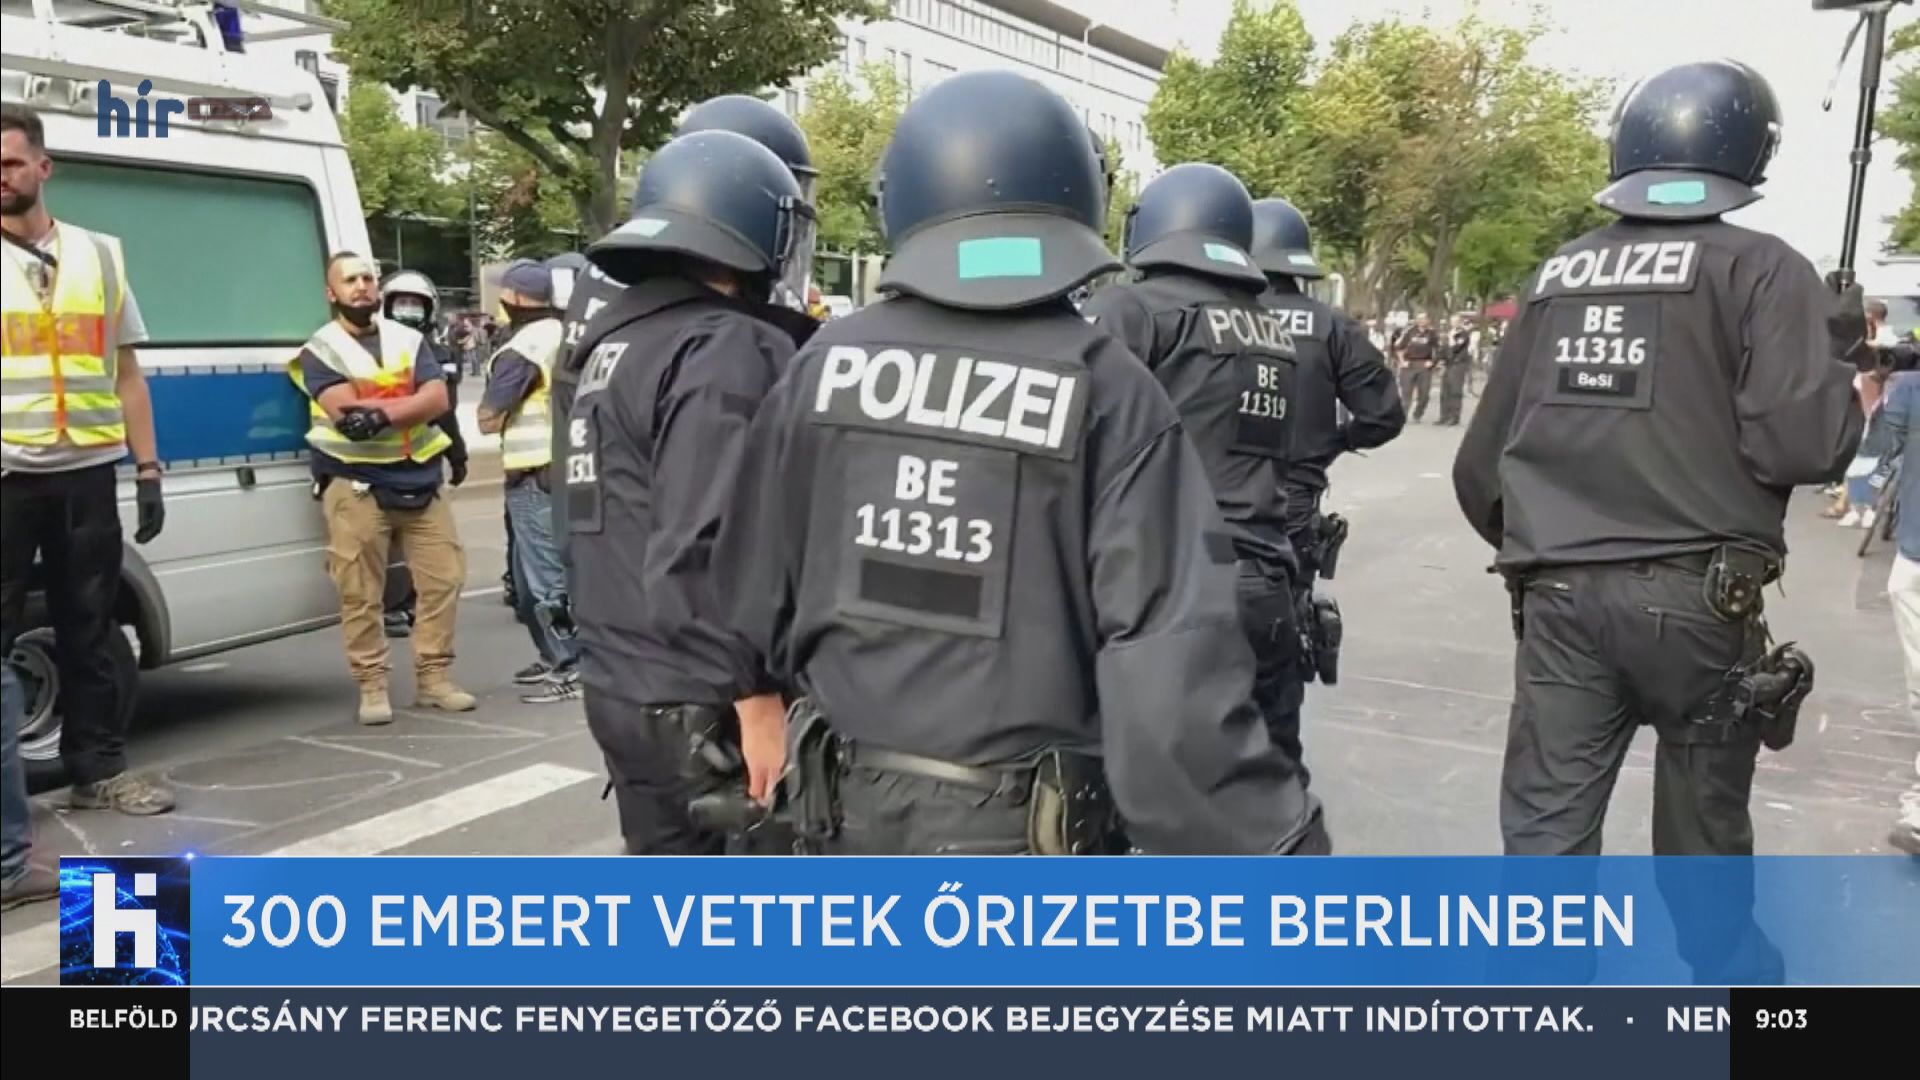 300 embert vettek őrizetbe Berlinben